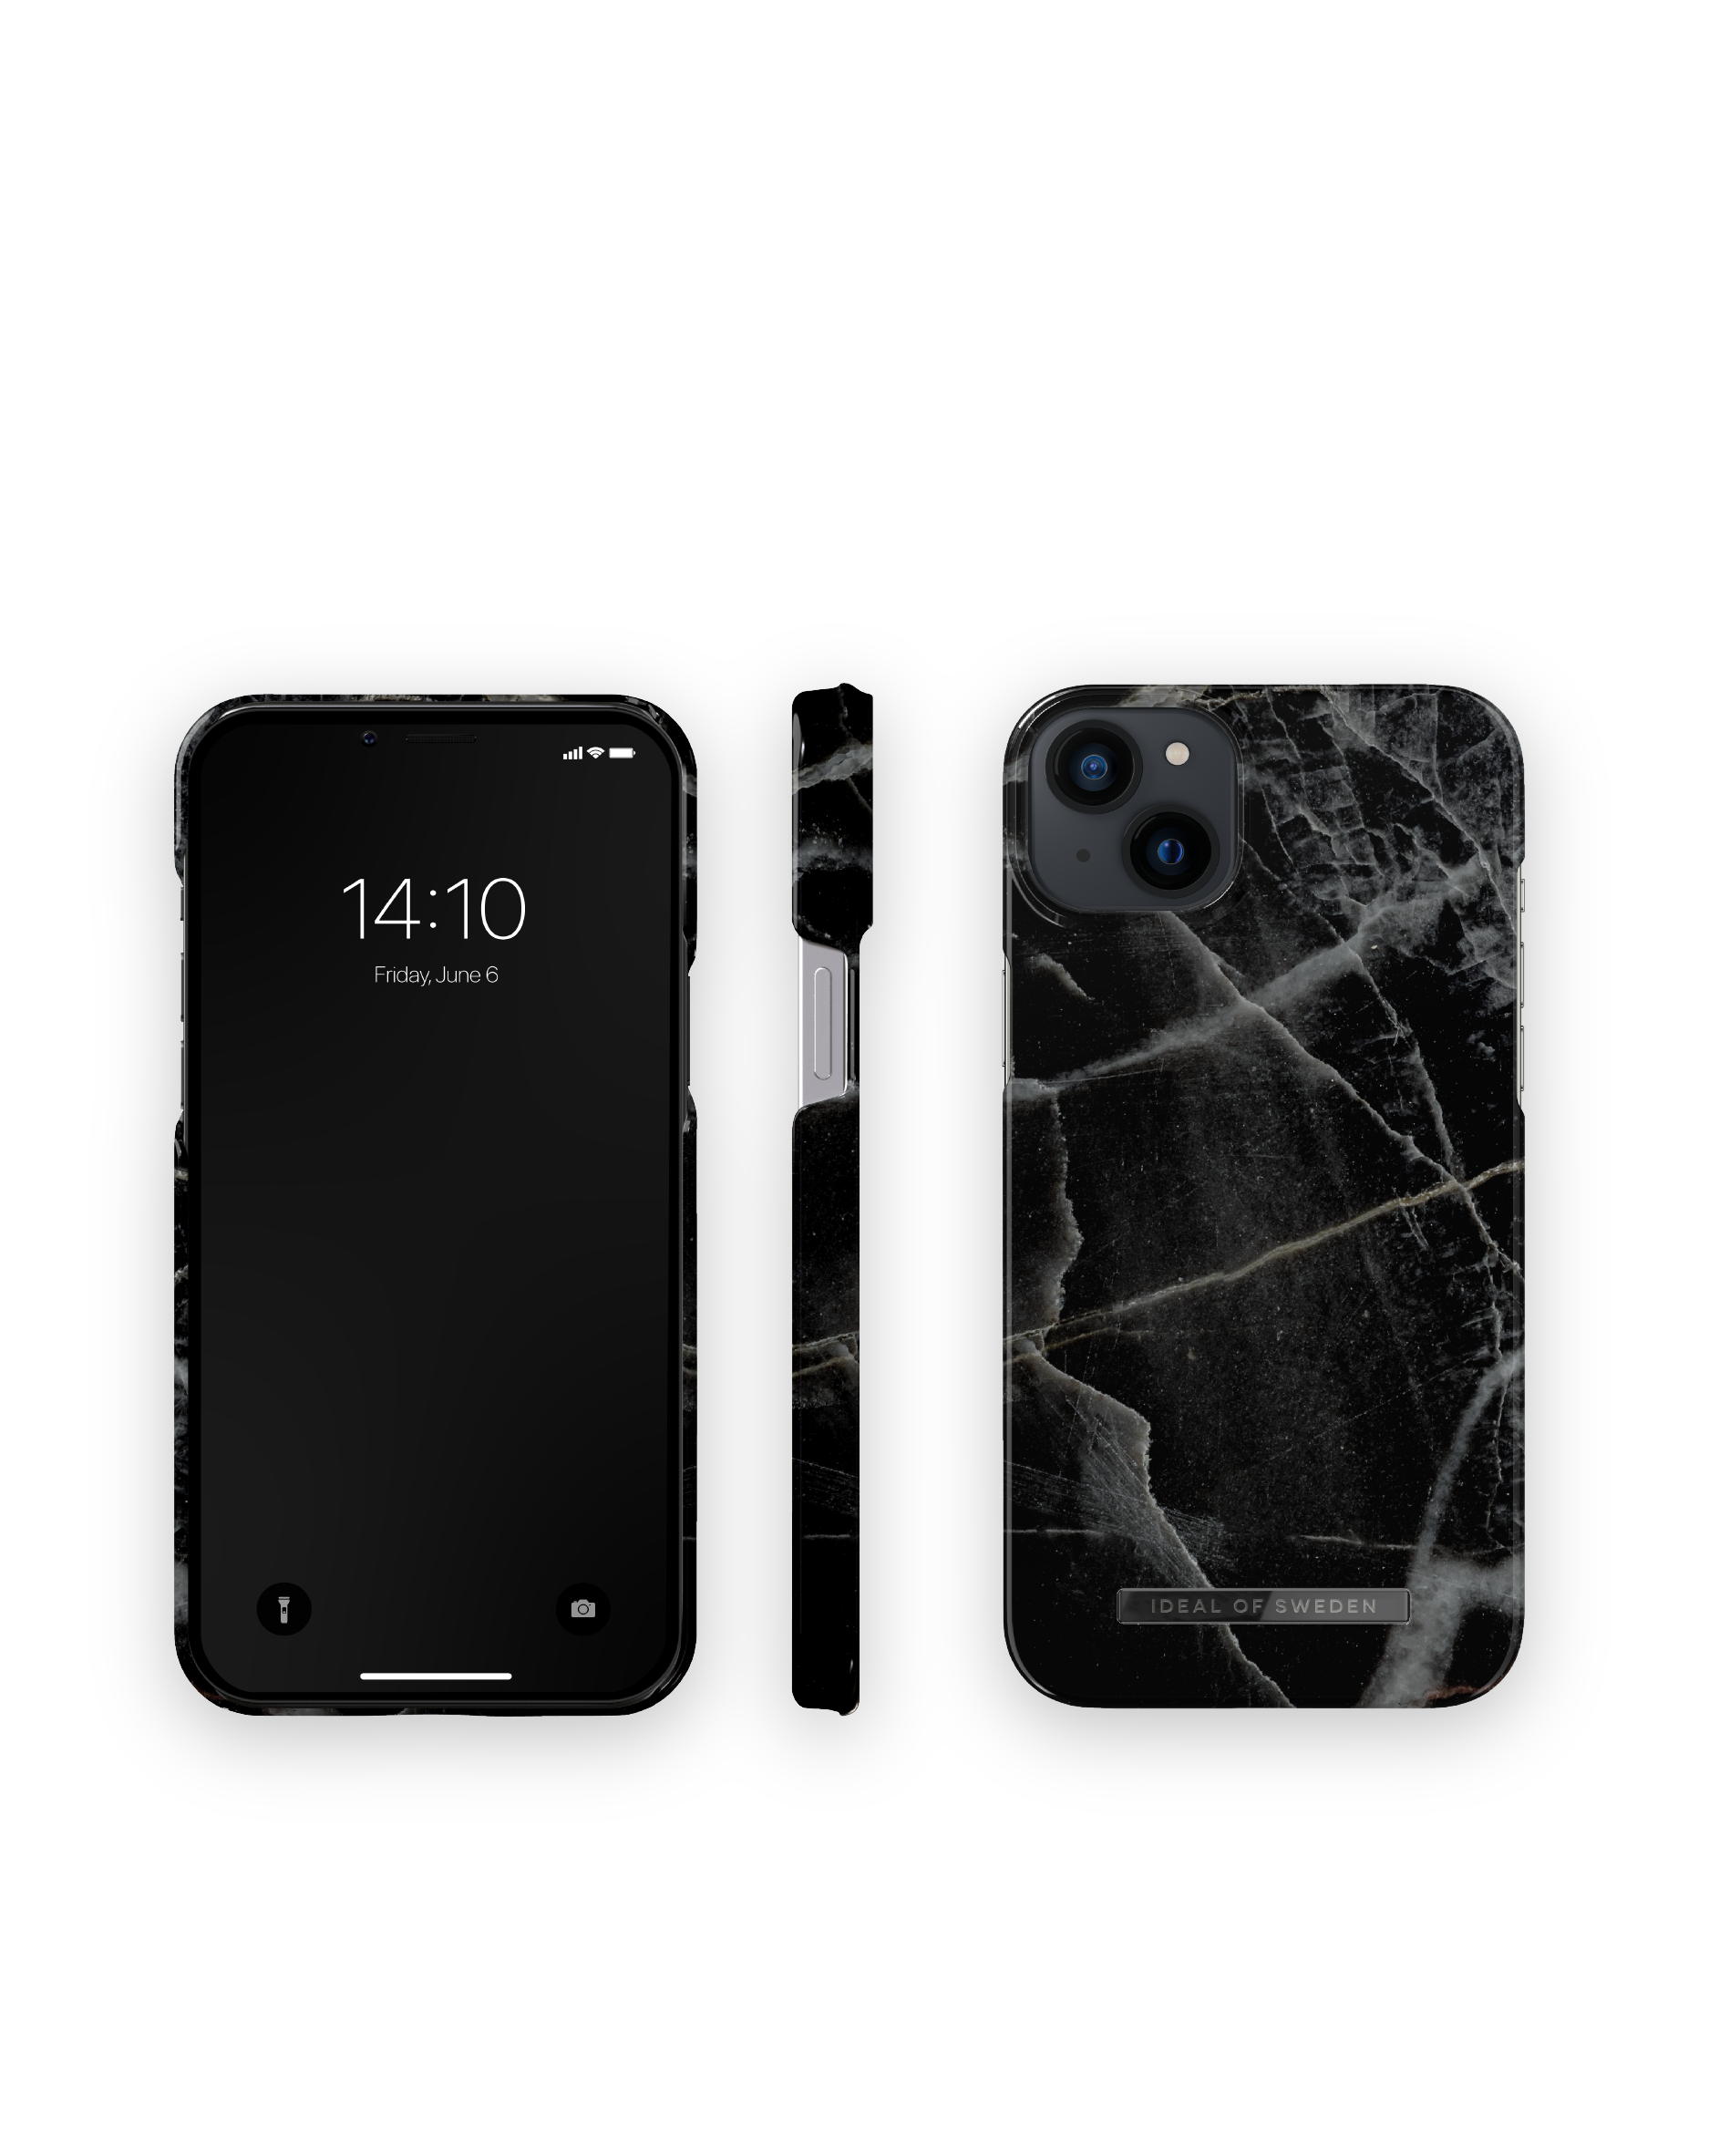 IDEAL OF Apple, Marble Plus, Black Backcover, 14 Thunder IDFCMTE22-I2267-358, SWEDEN iPhone